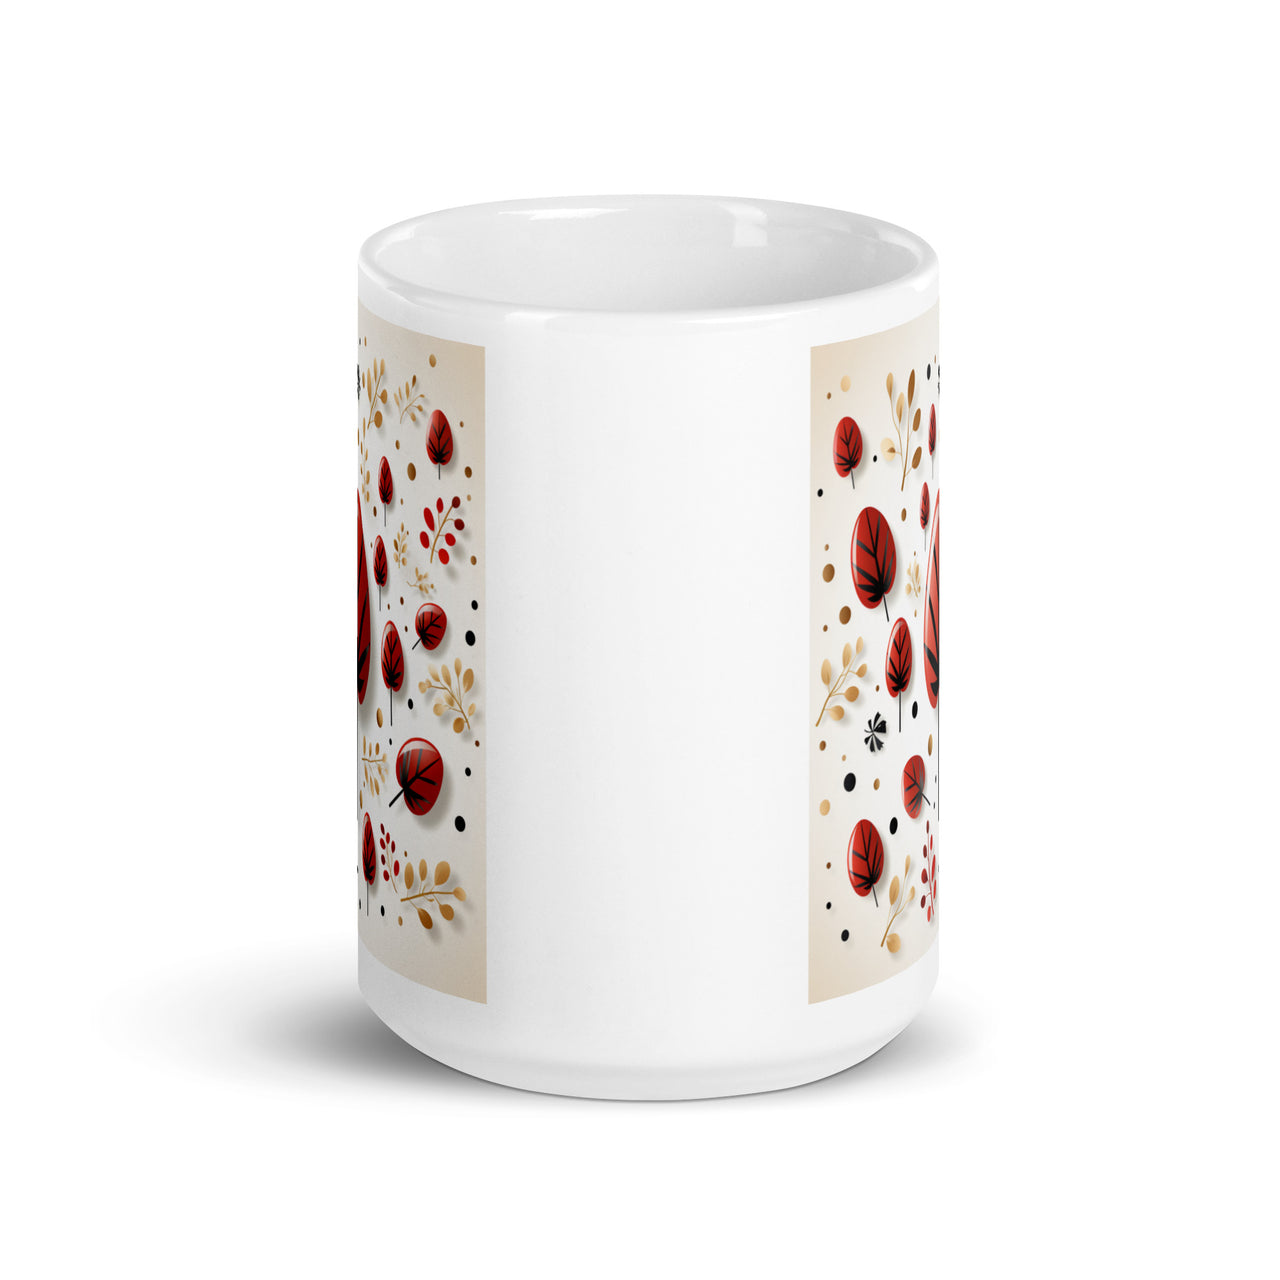 Red And Black Leaf Pattern White Coffee Mug